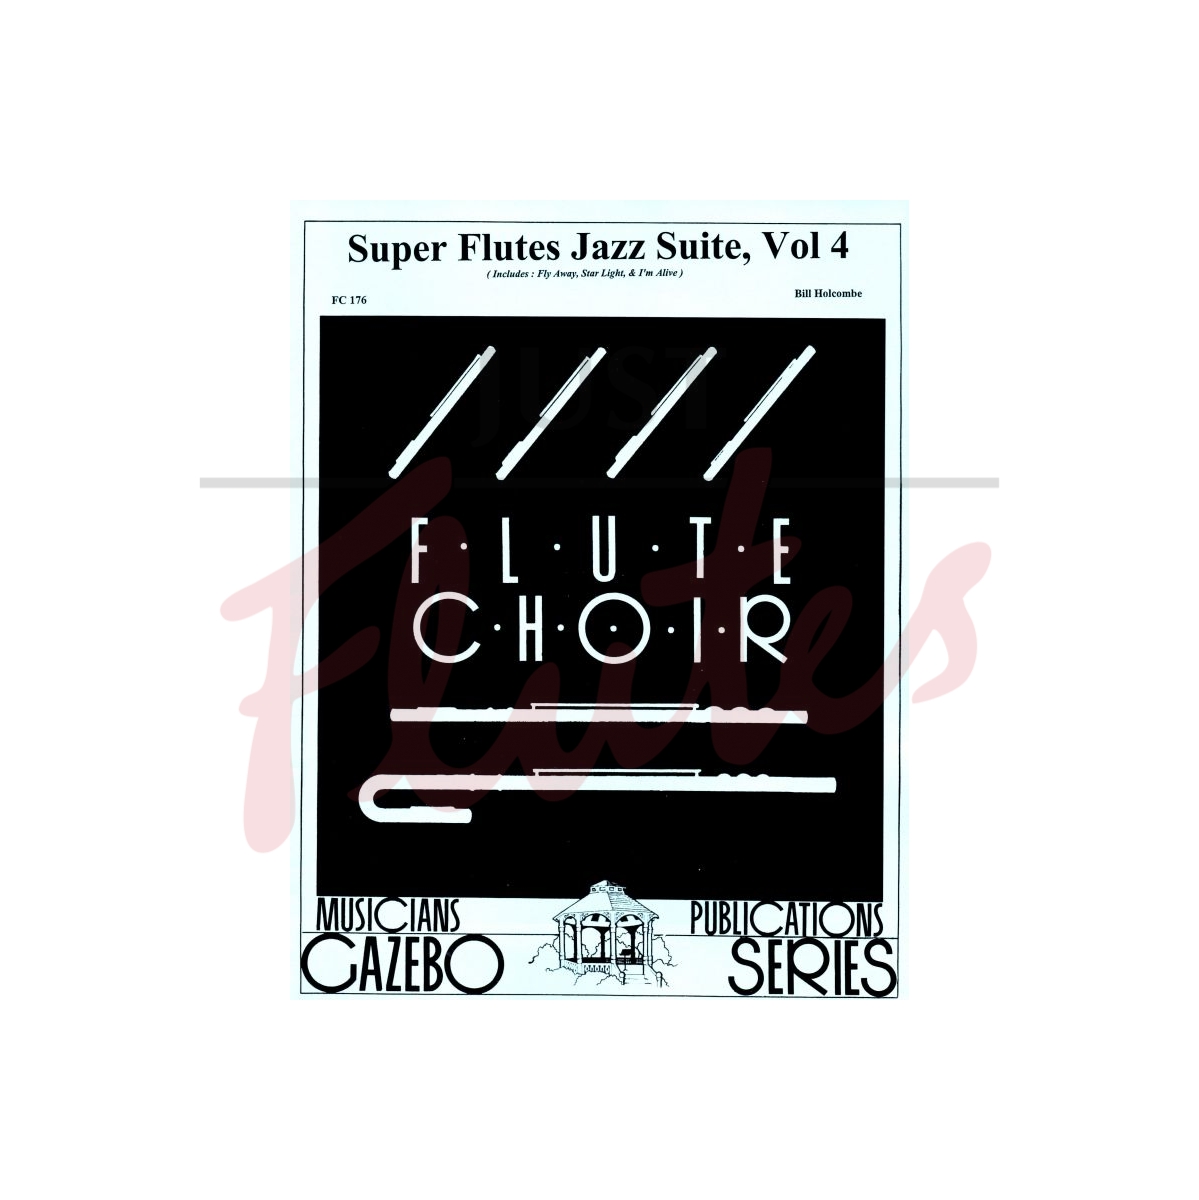 Super Flutes Jazz Suite, Vol 4